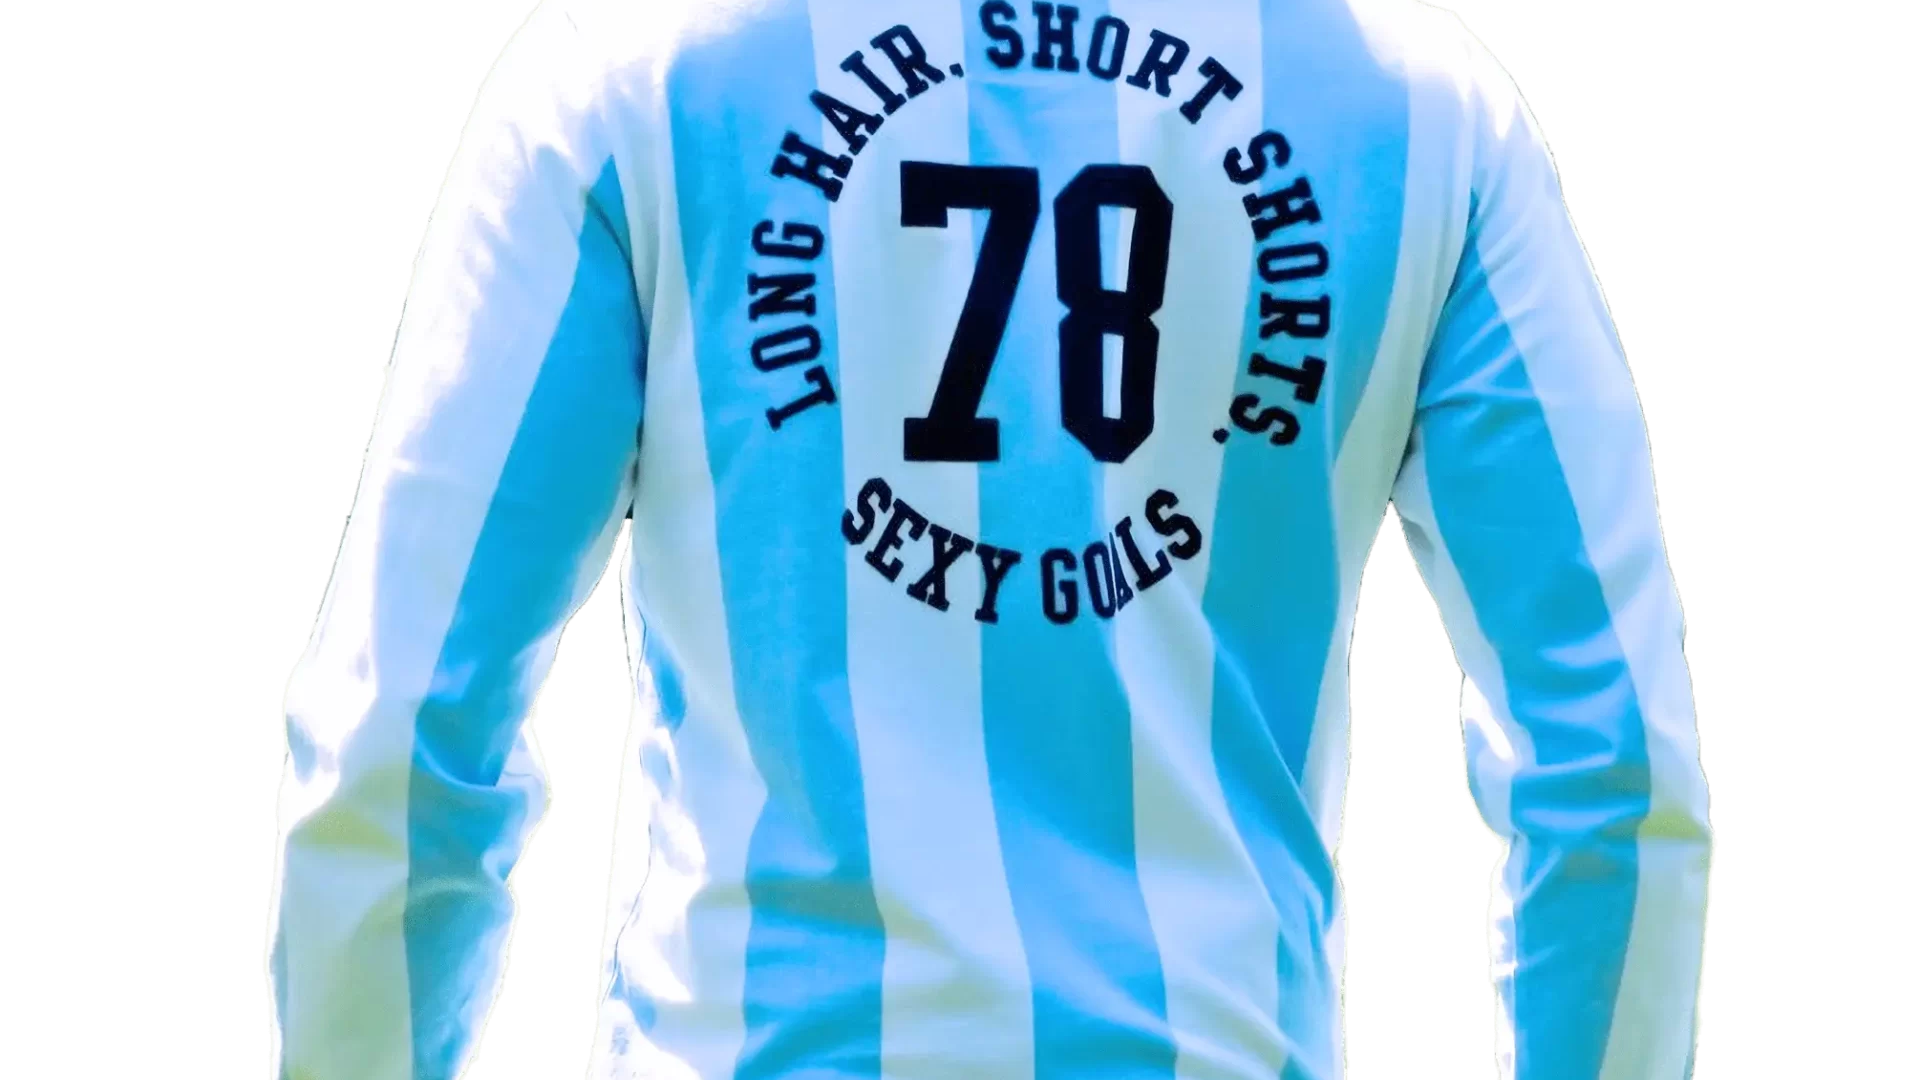 Men's 2006 Argentina WC '78 LS by Adidas Originals: Innocent (EnLawded.com file #lmchk46943ip2y122407kg9st)